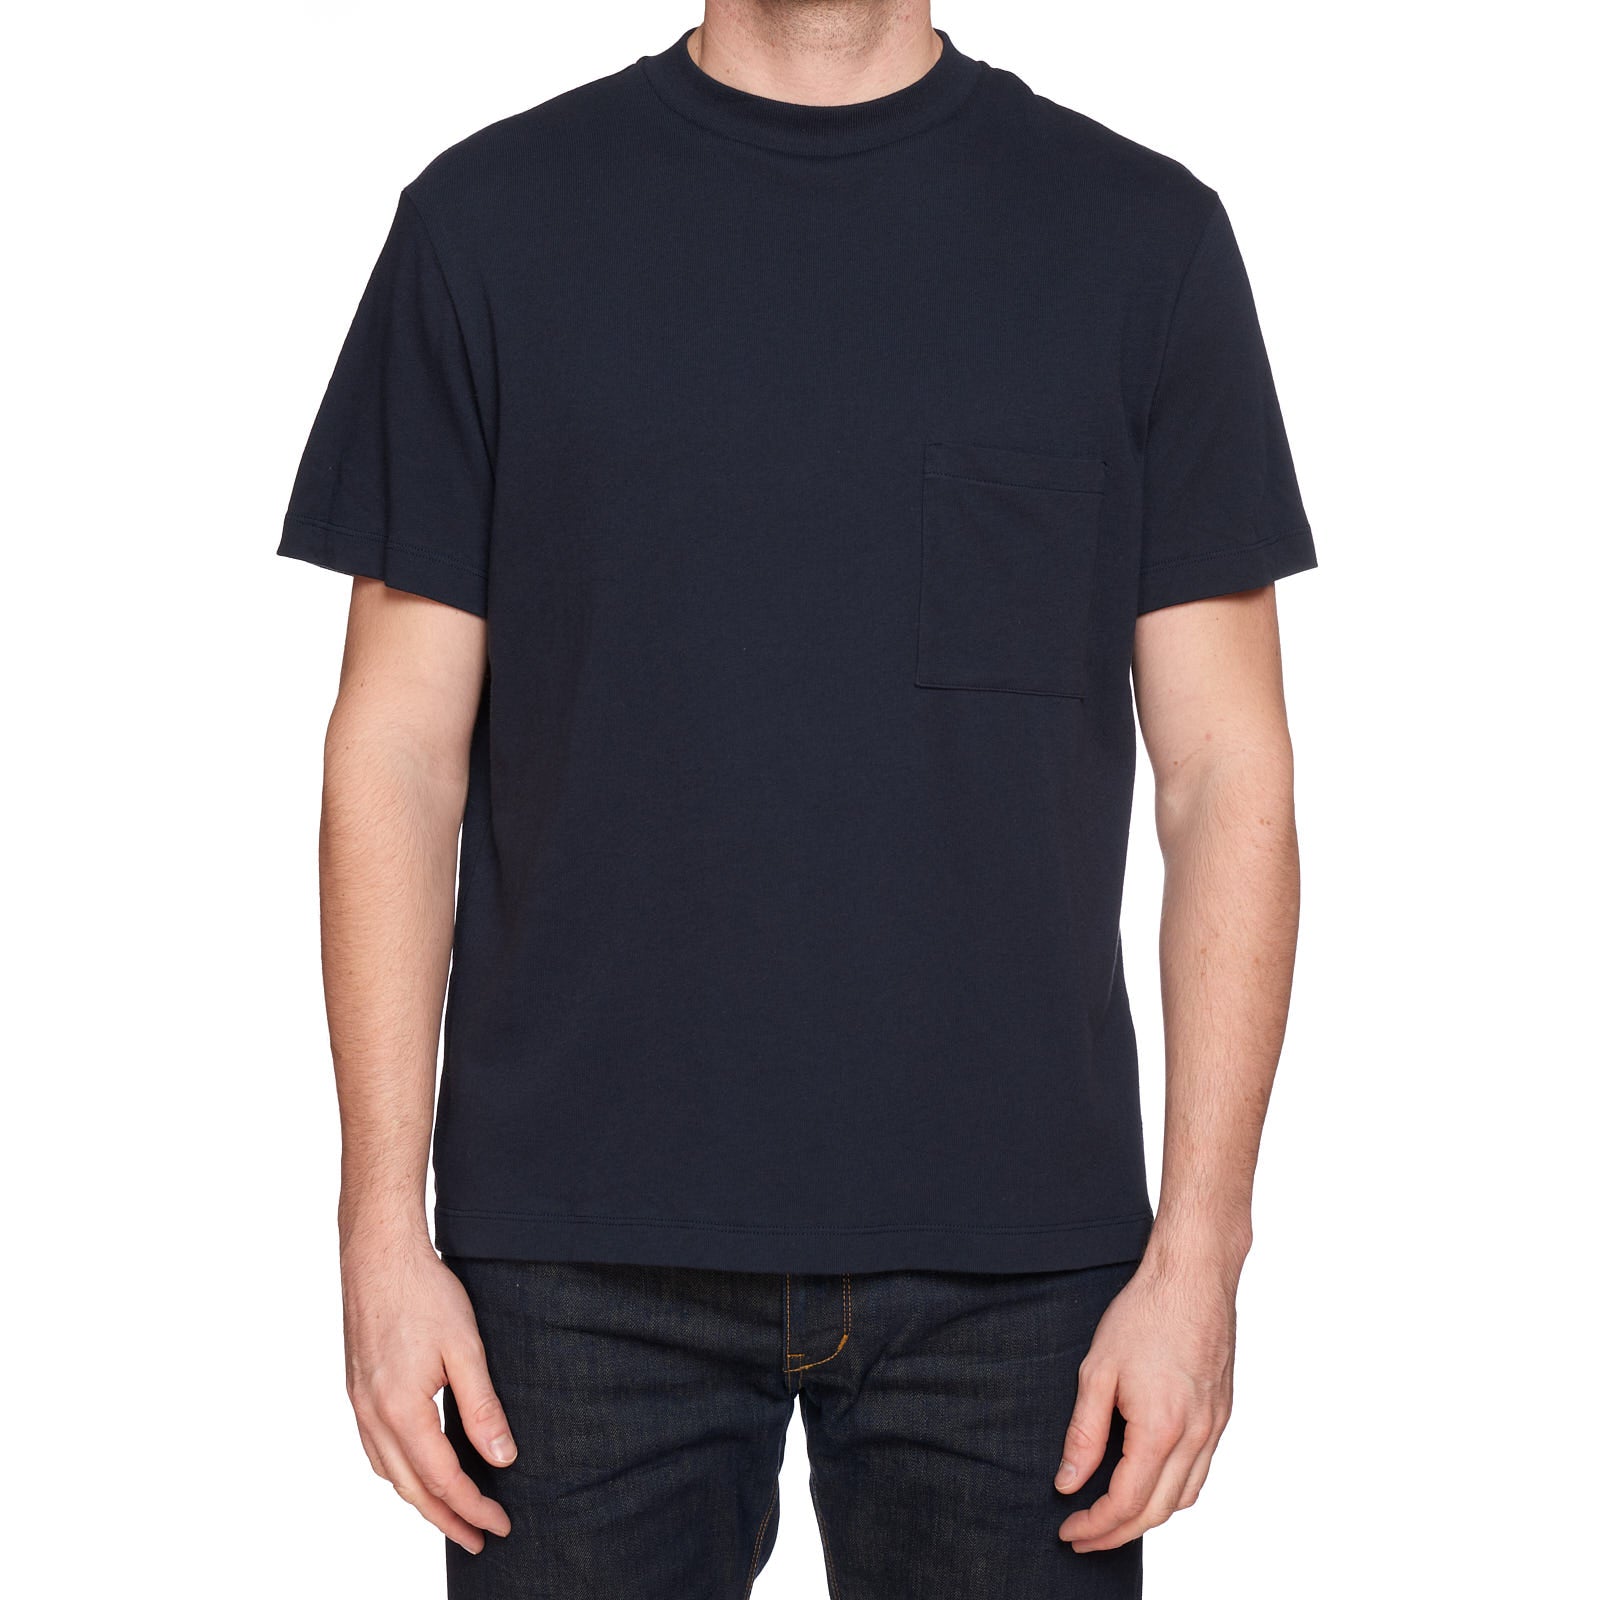 Men's T-Shirt - Back The Blue Solid White L